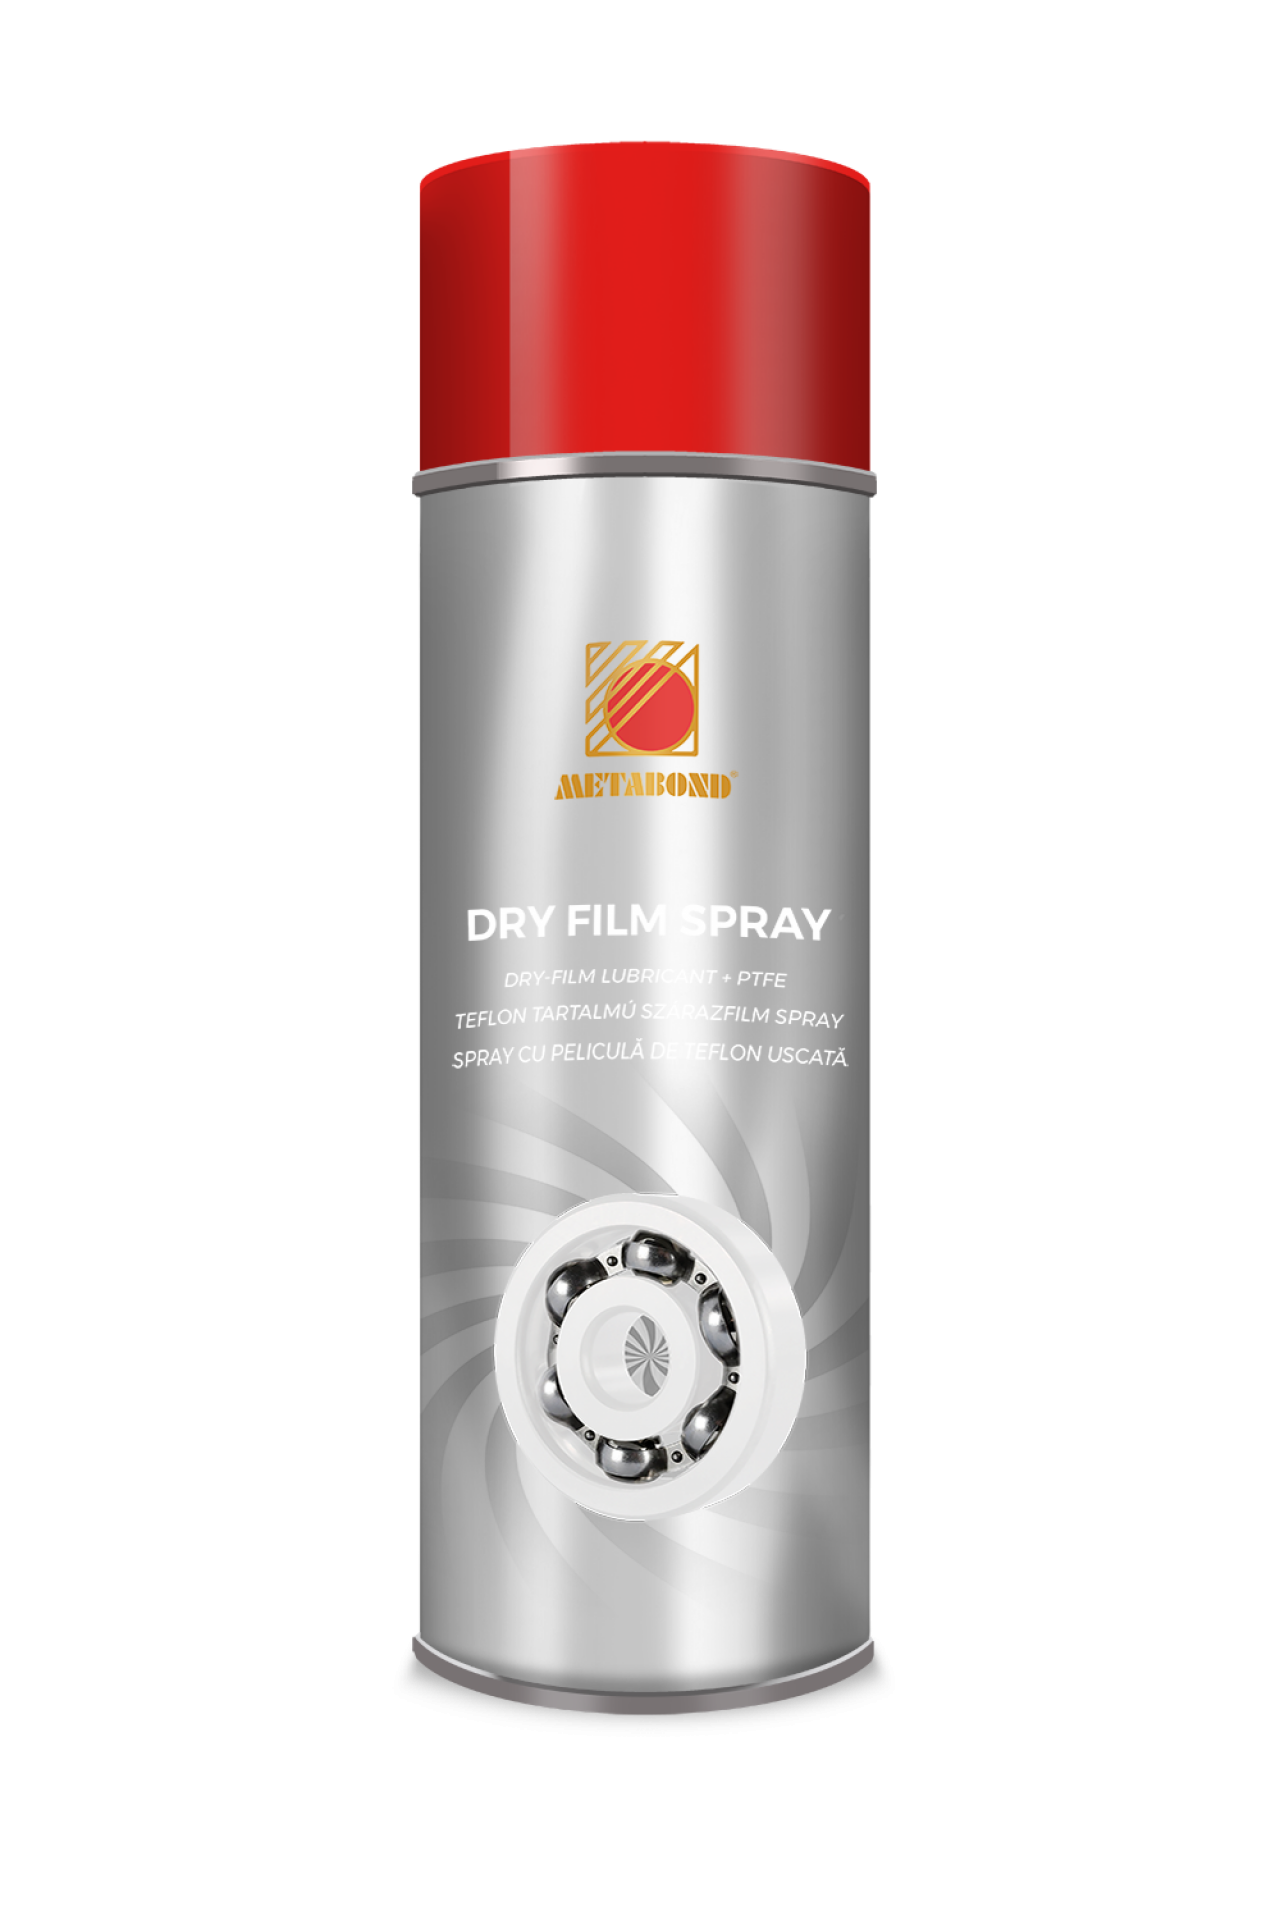 METABOND Dry Film Spray 500 ml